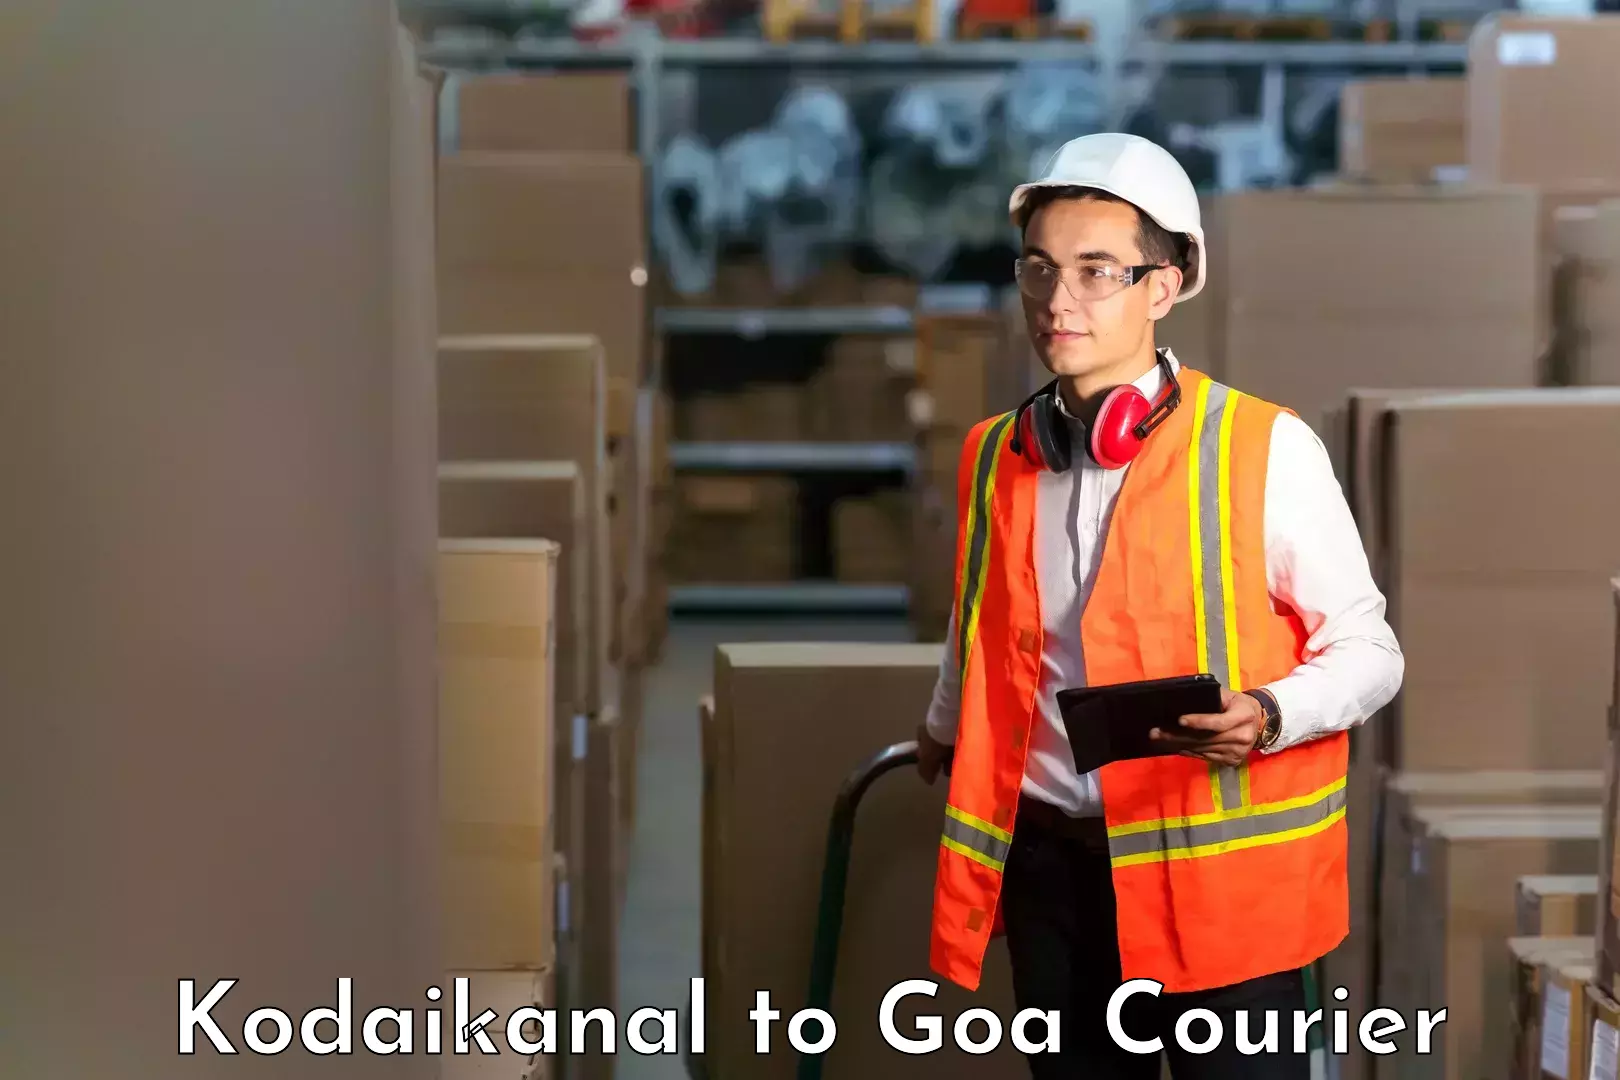 Courier service comparison Kodaikanal to Goa